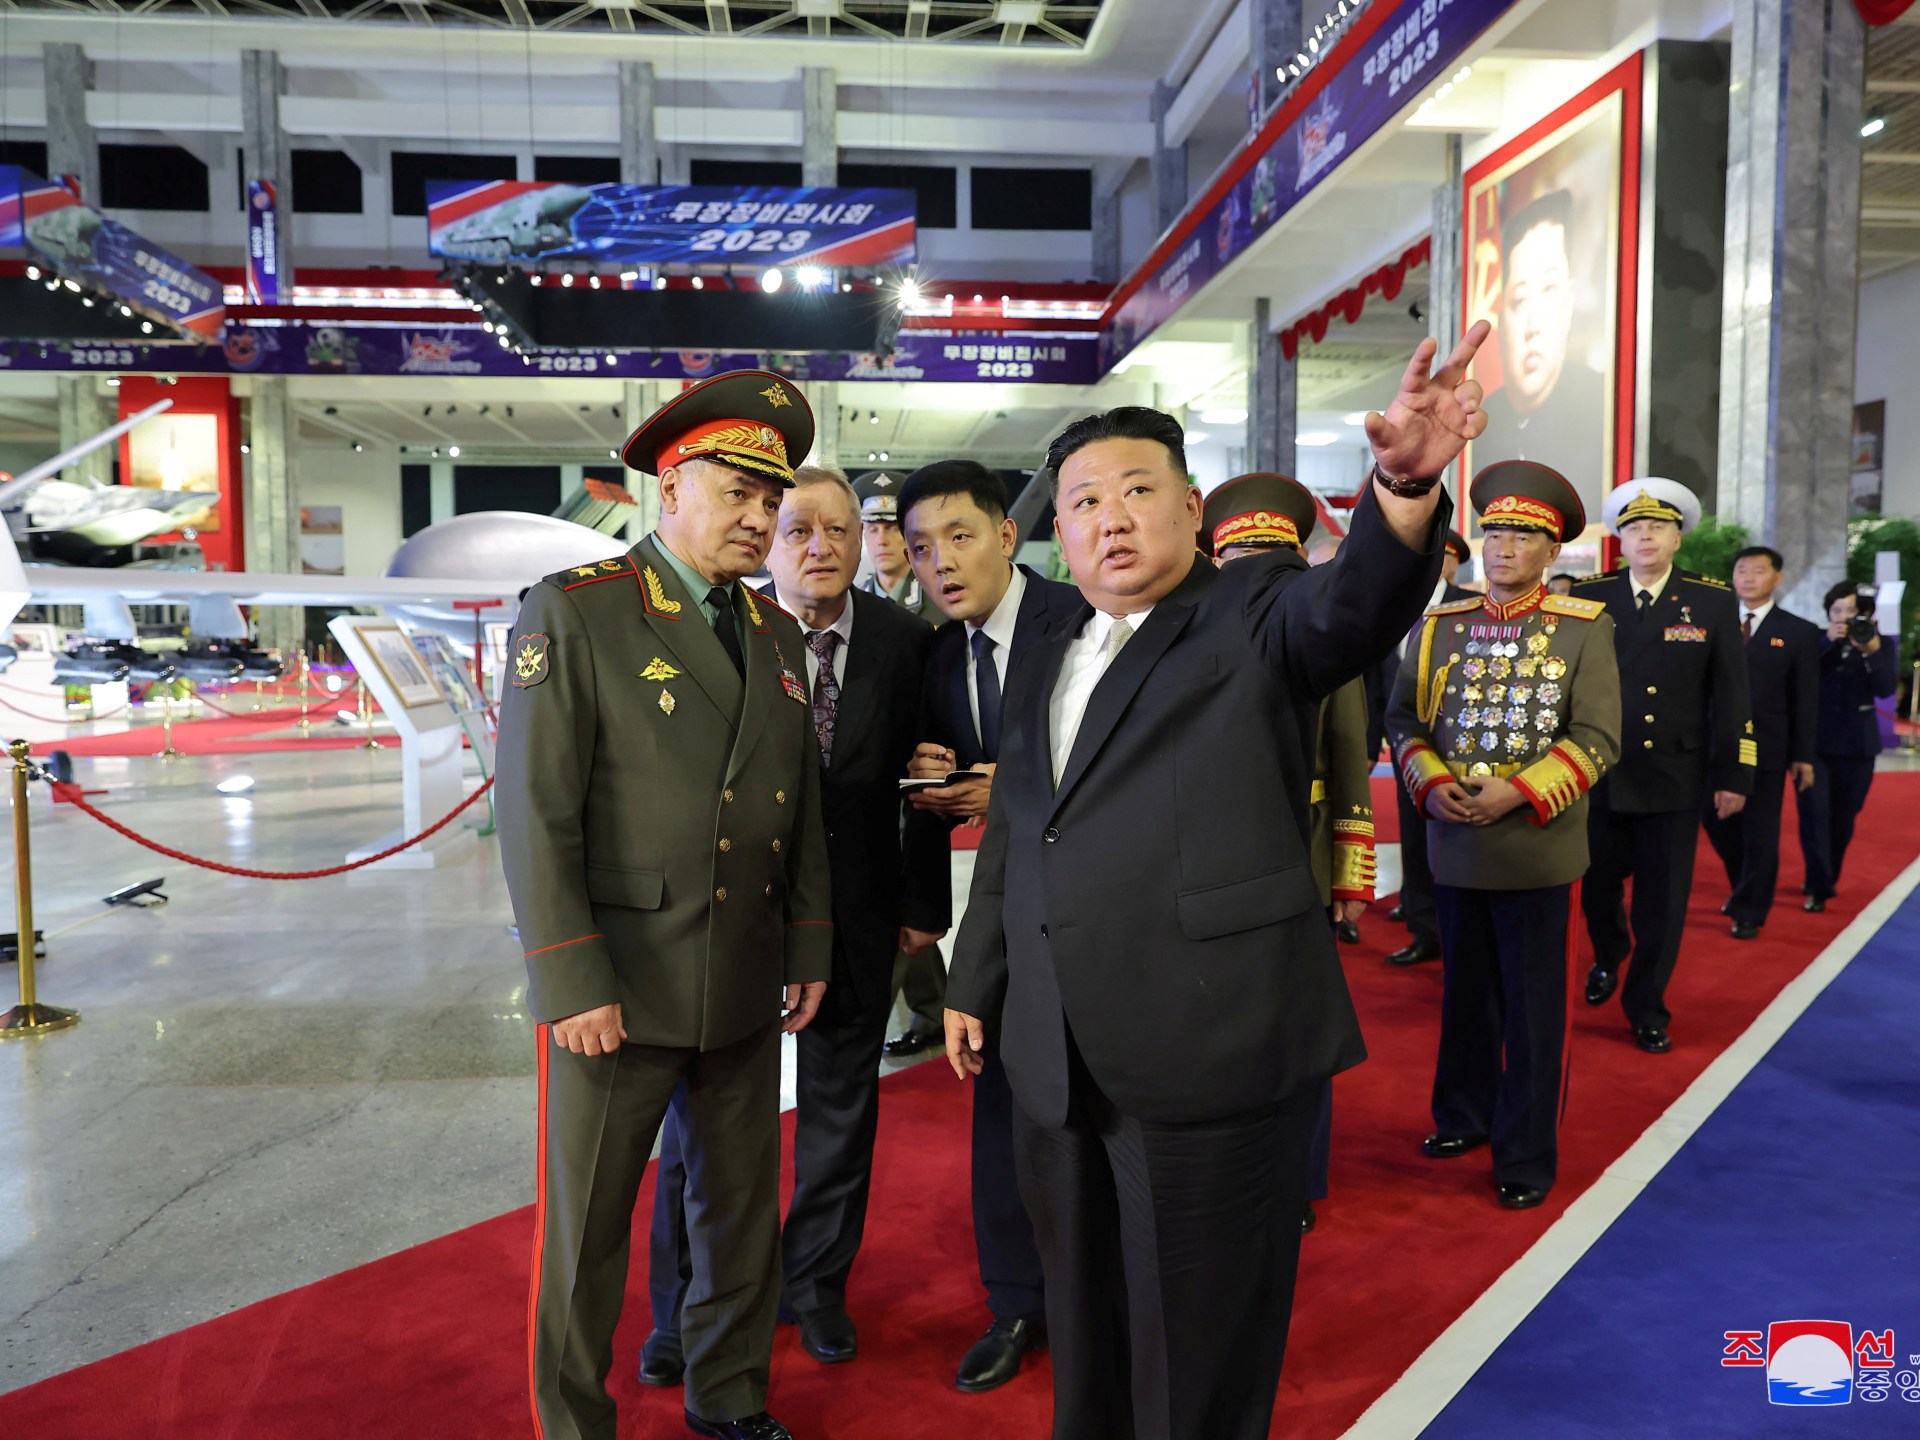 Poin Kim Korea Utara melarang rudal di Shoigu Rusia |  Berita perang Rusia-Ukraina